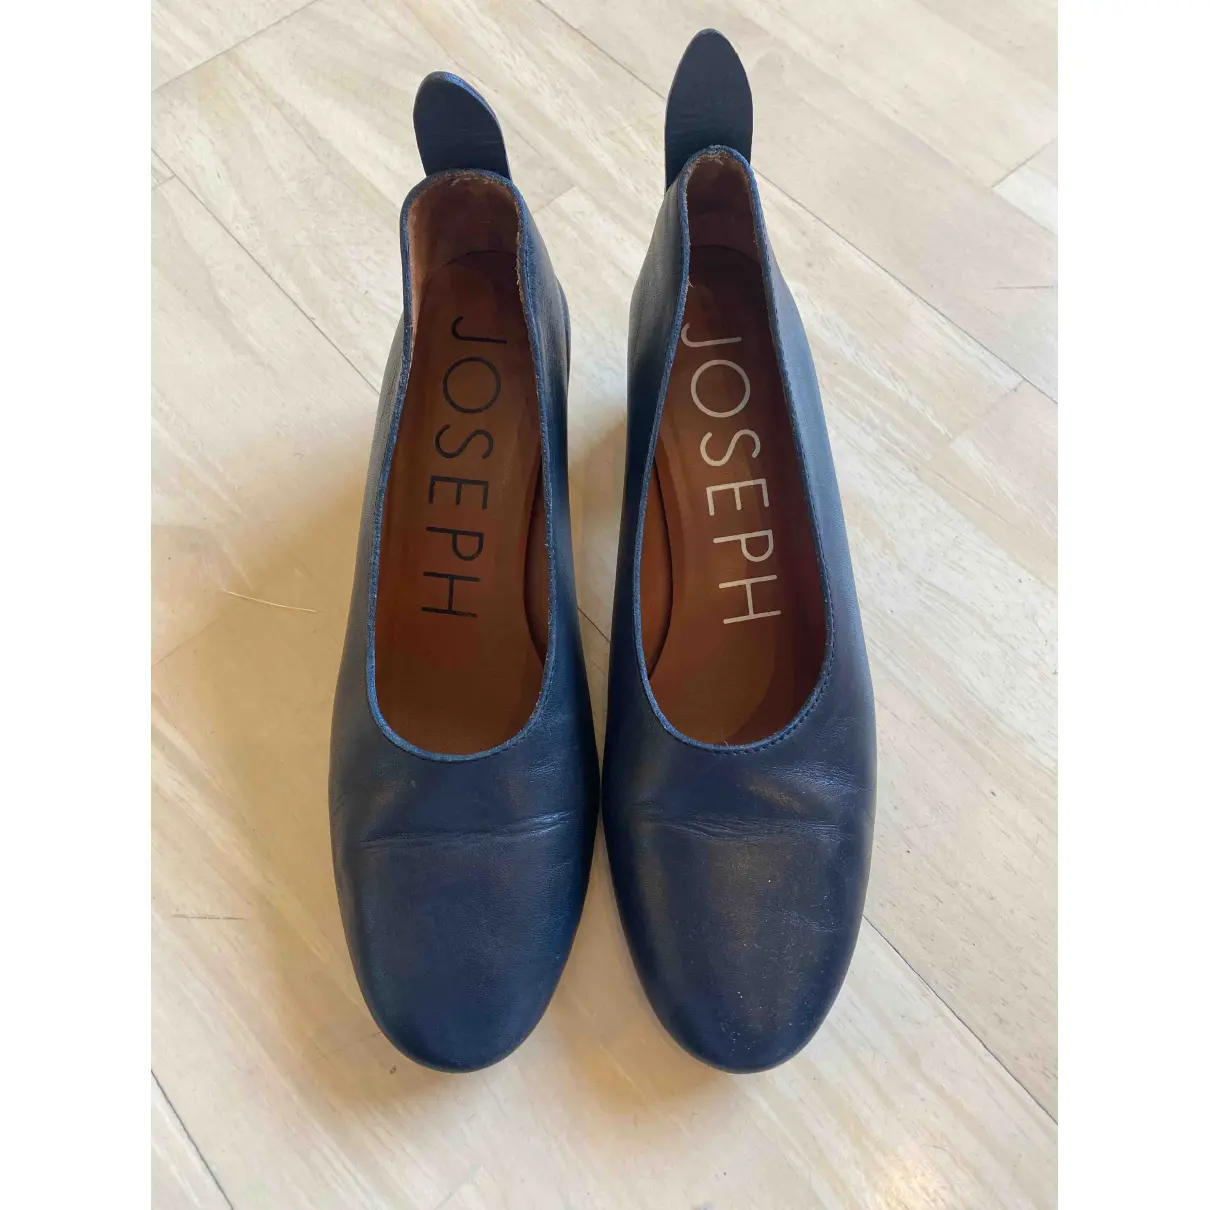 Buy Joseph Leather heels online